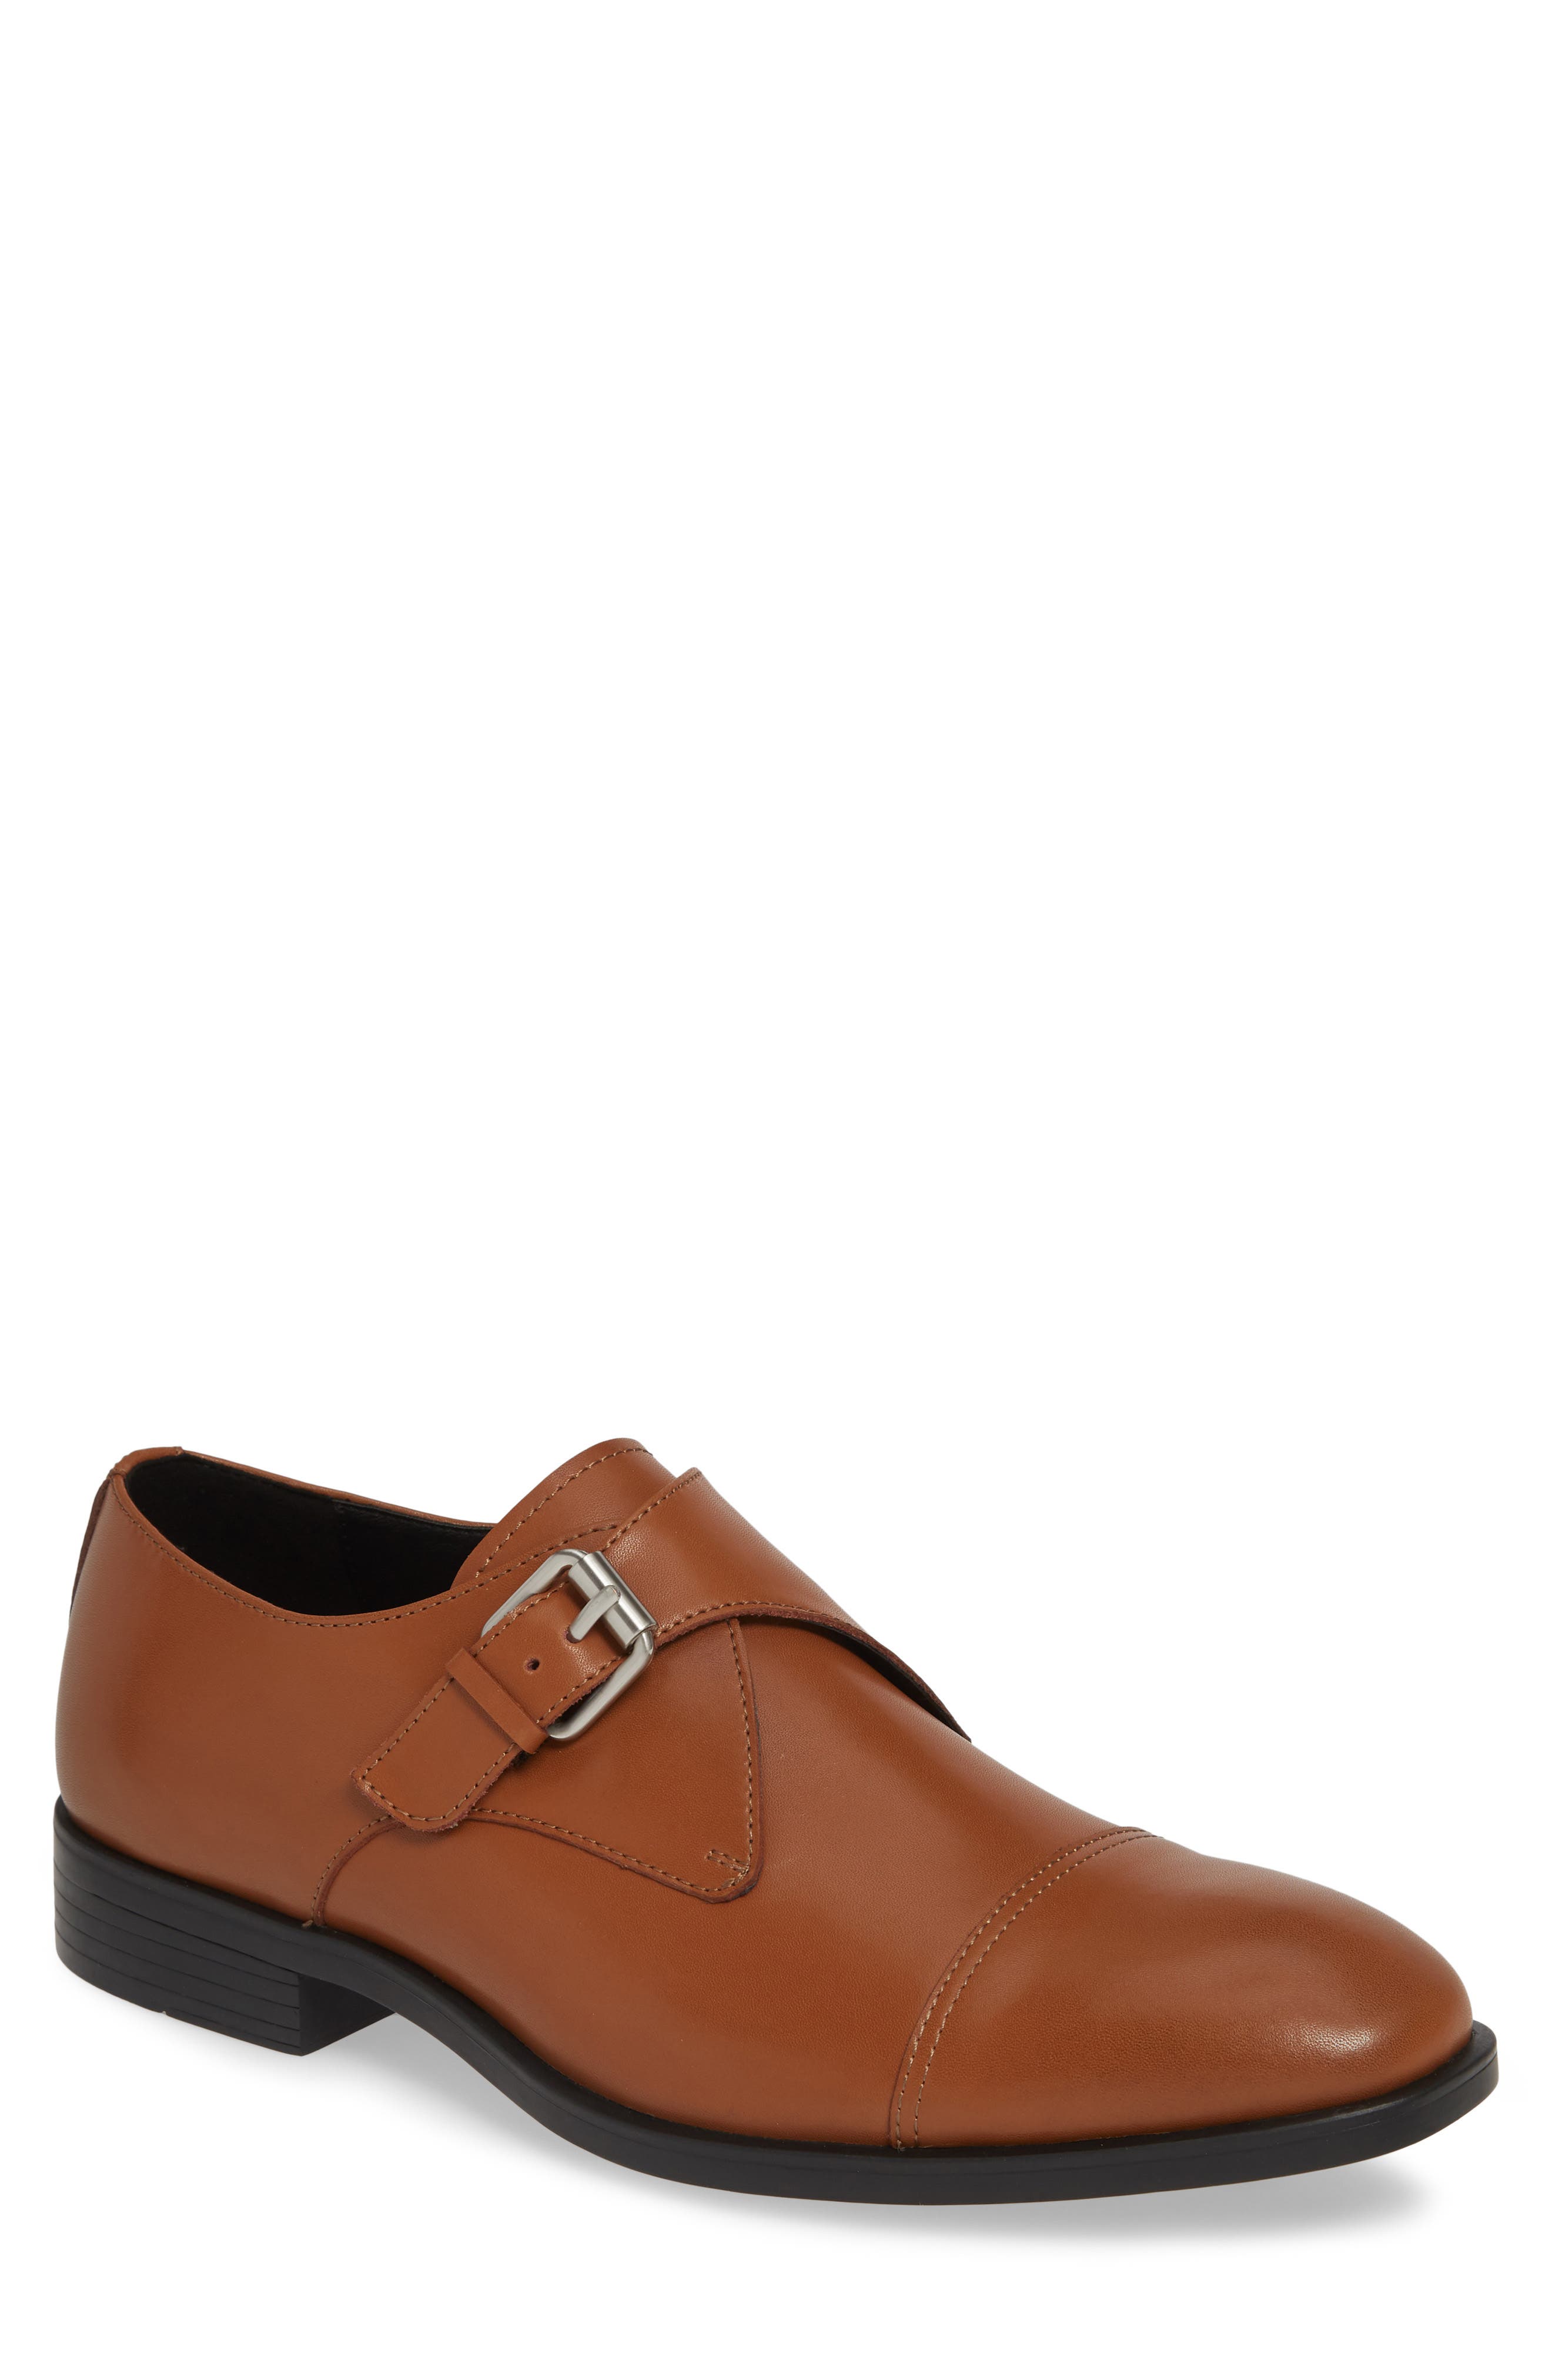 UPC 192675341172 product image for Men's Calvin Klein Channer Monk Strap Shoe, Size 8.5 M - Brown | upcitemdb.com